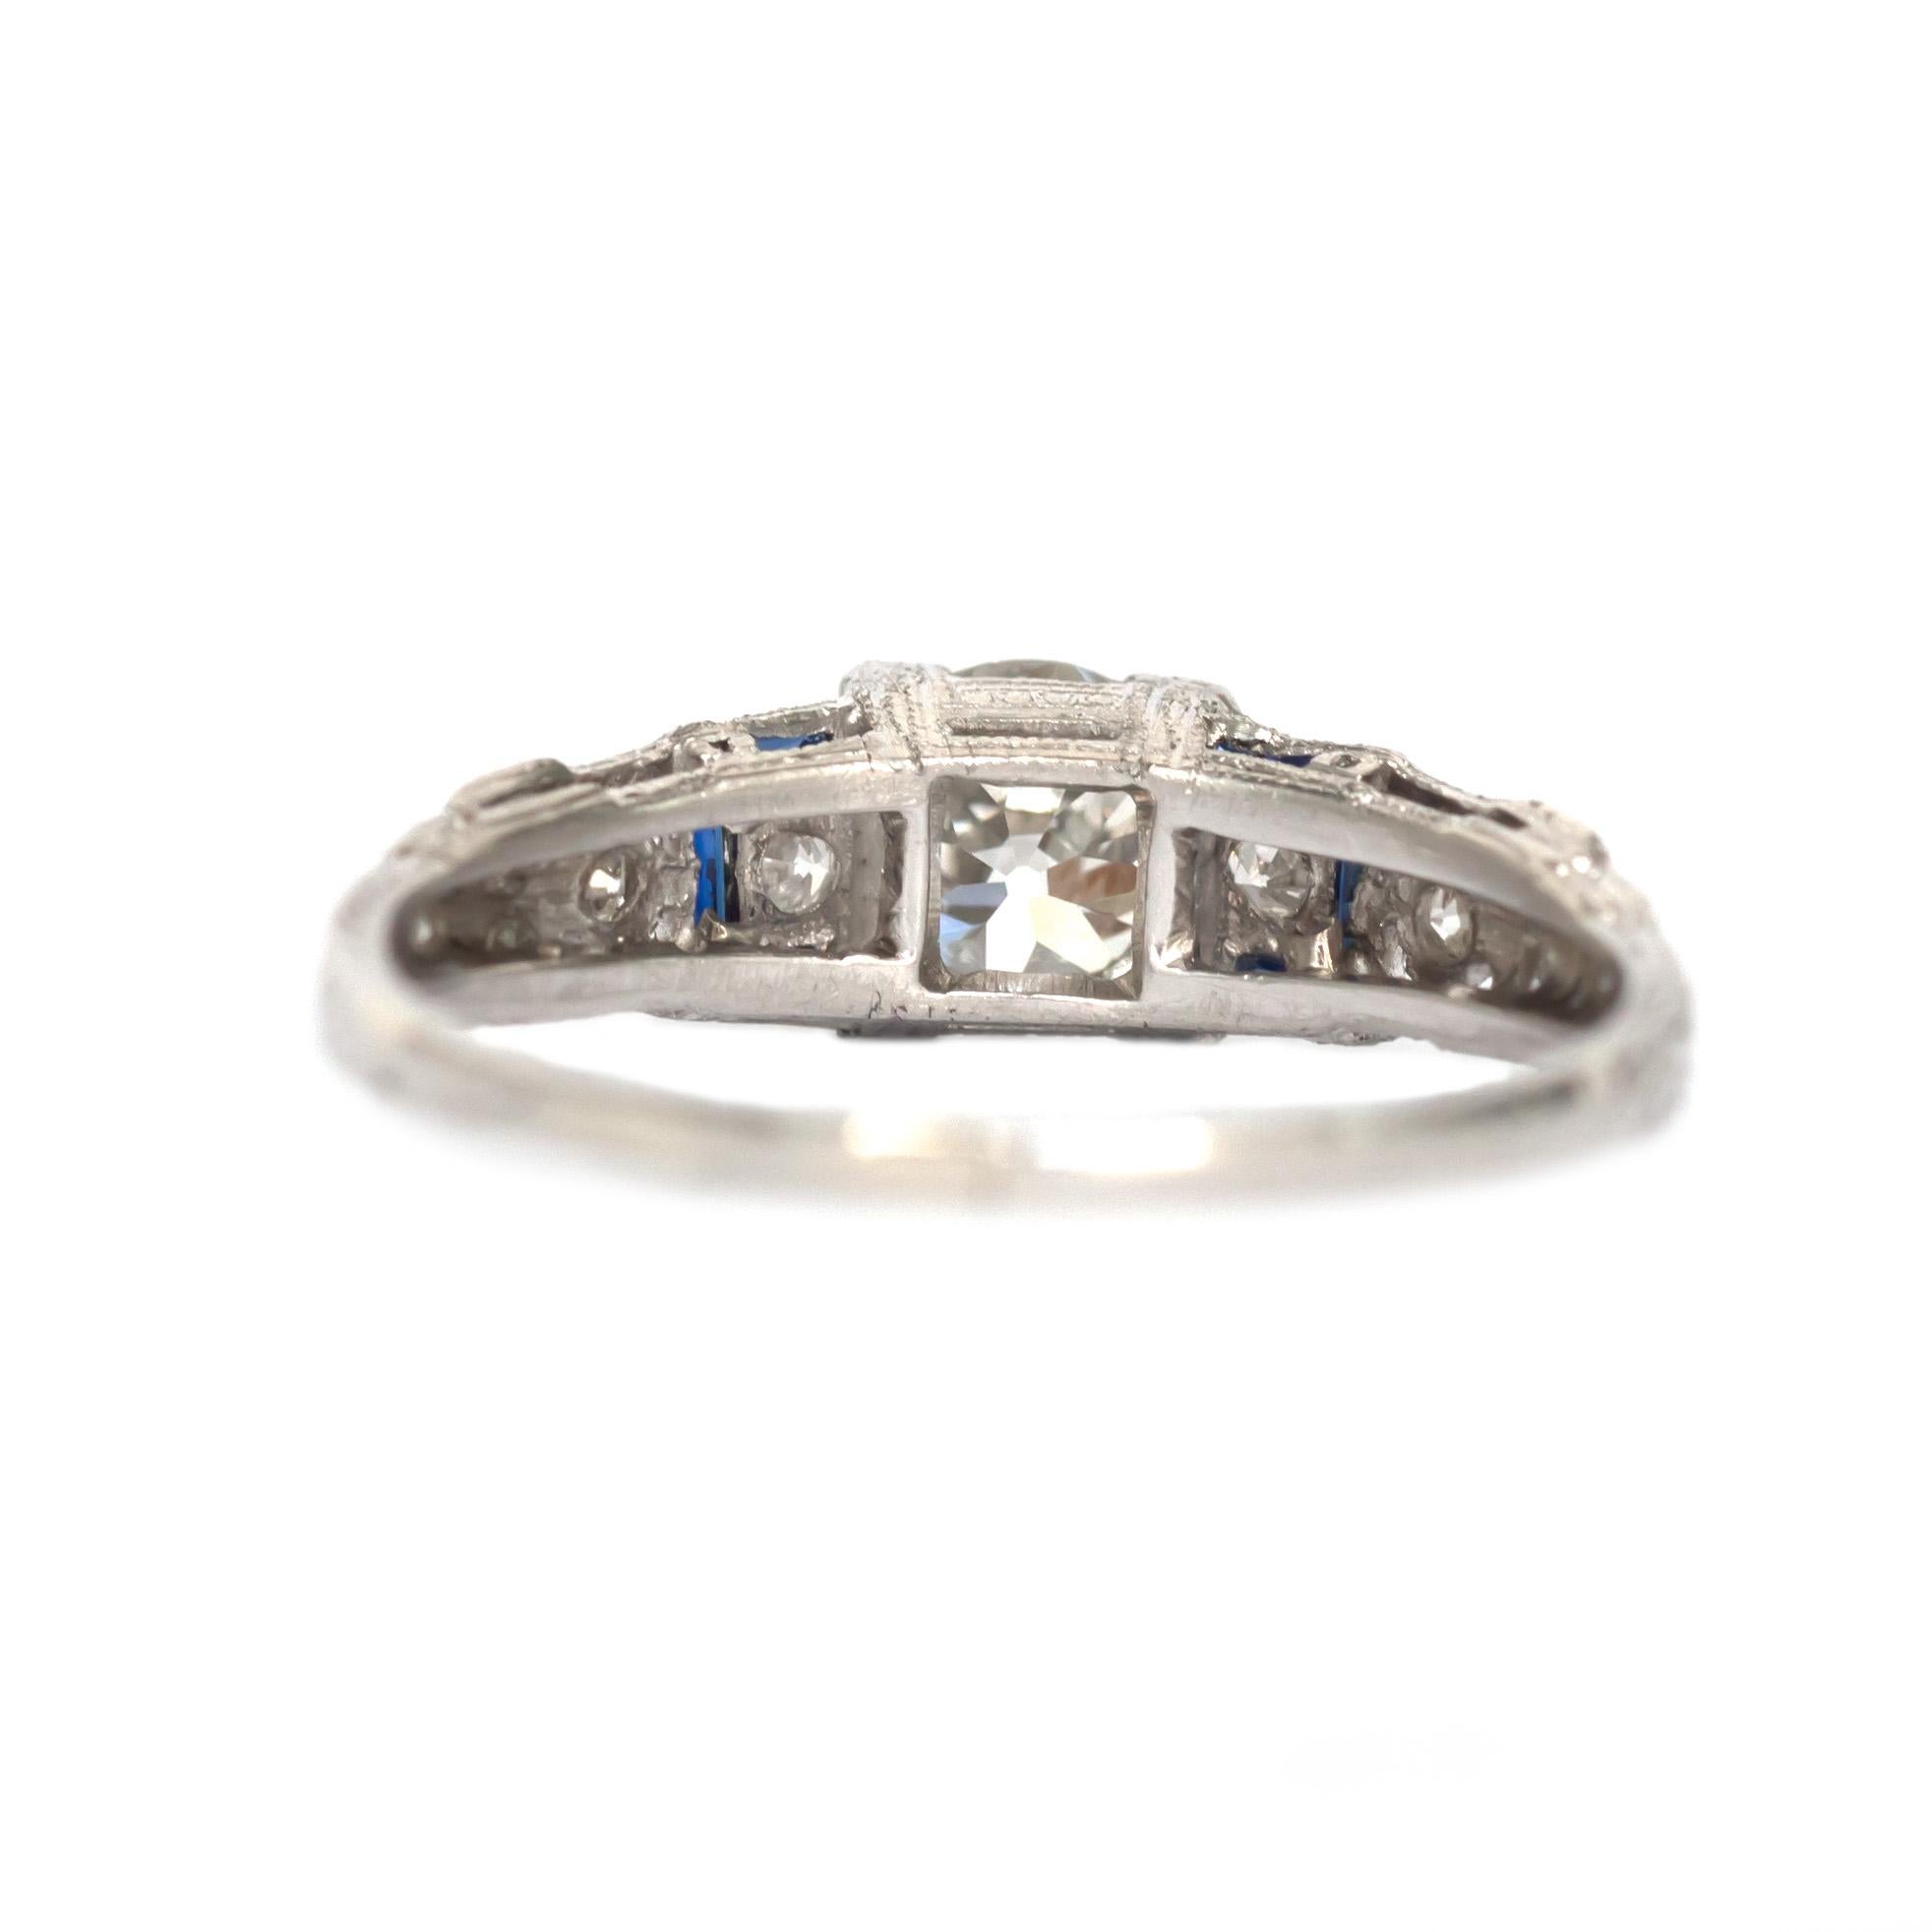 3.2 carat diamond ring